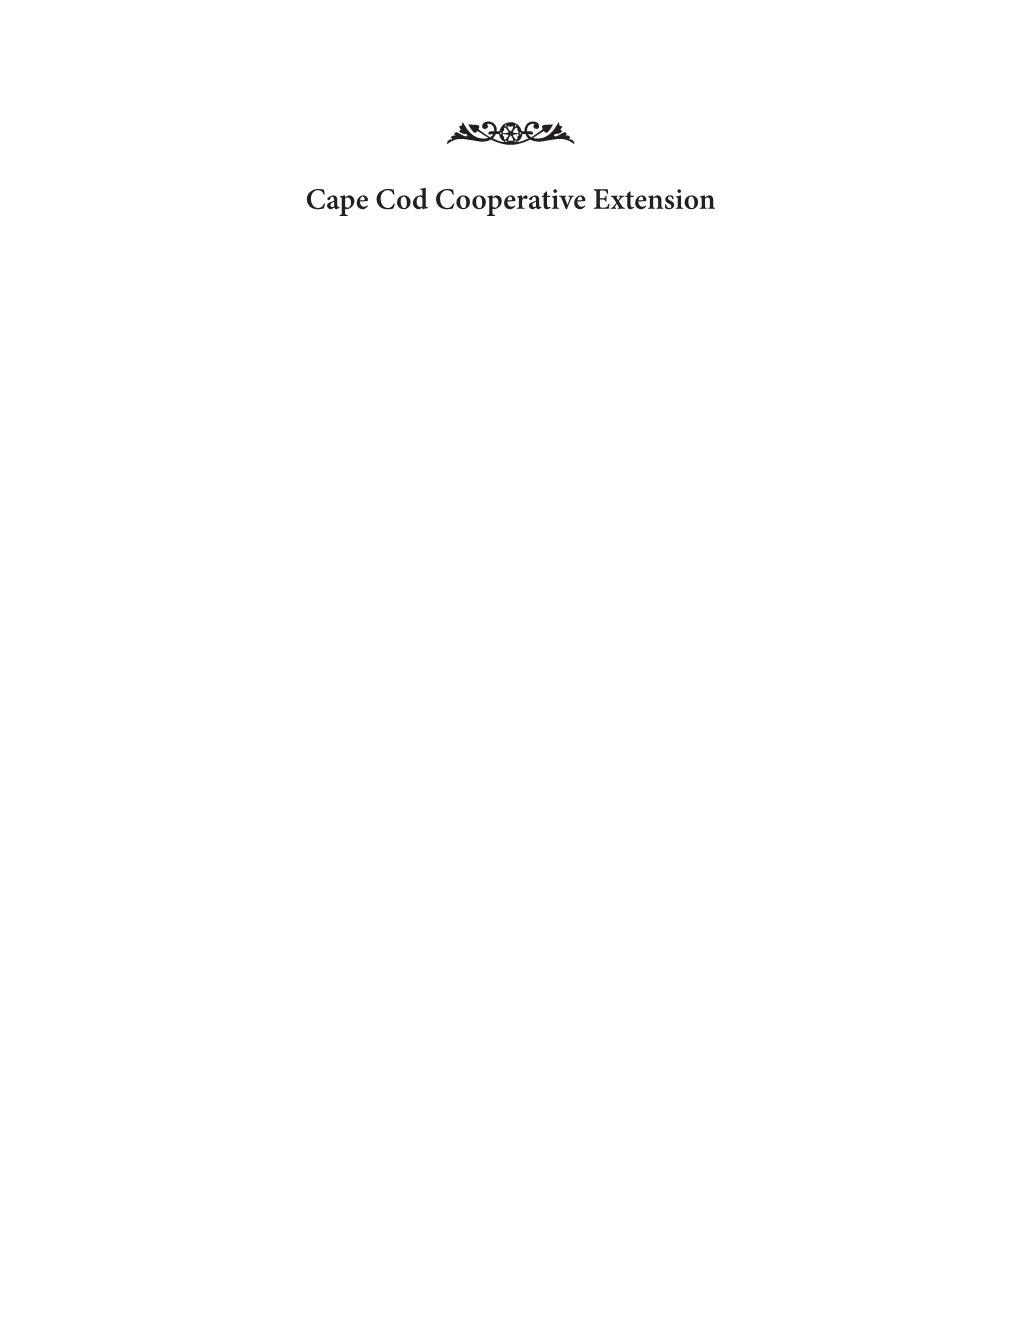 Cape Cod Cooperative Extension